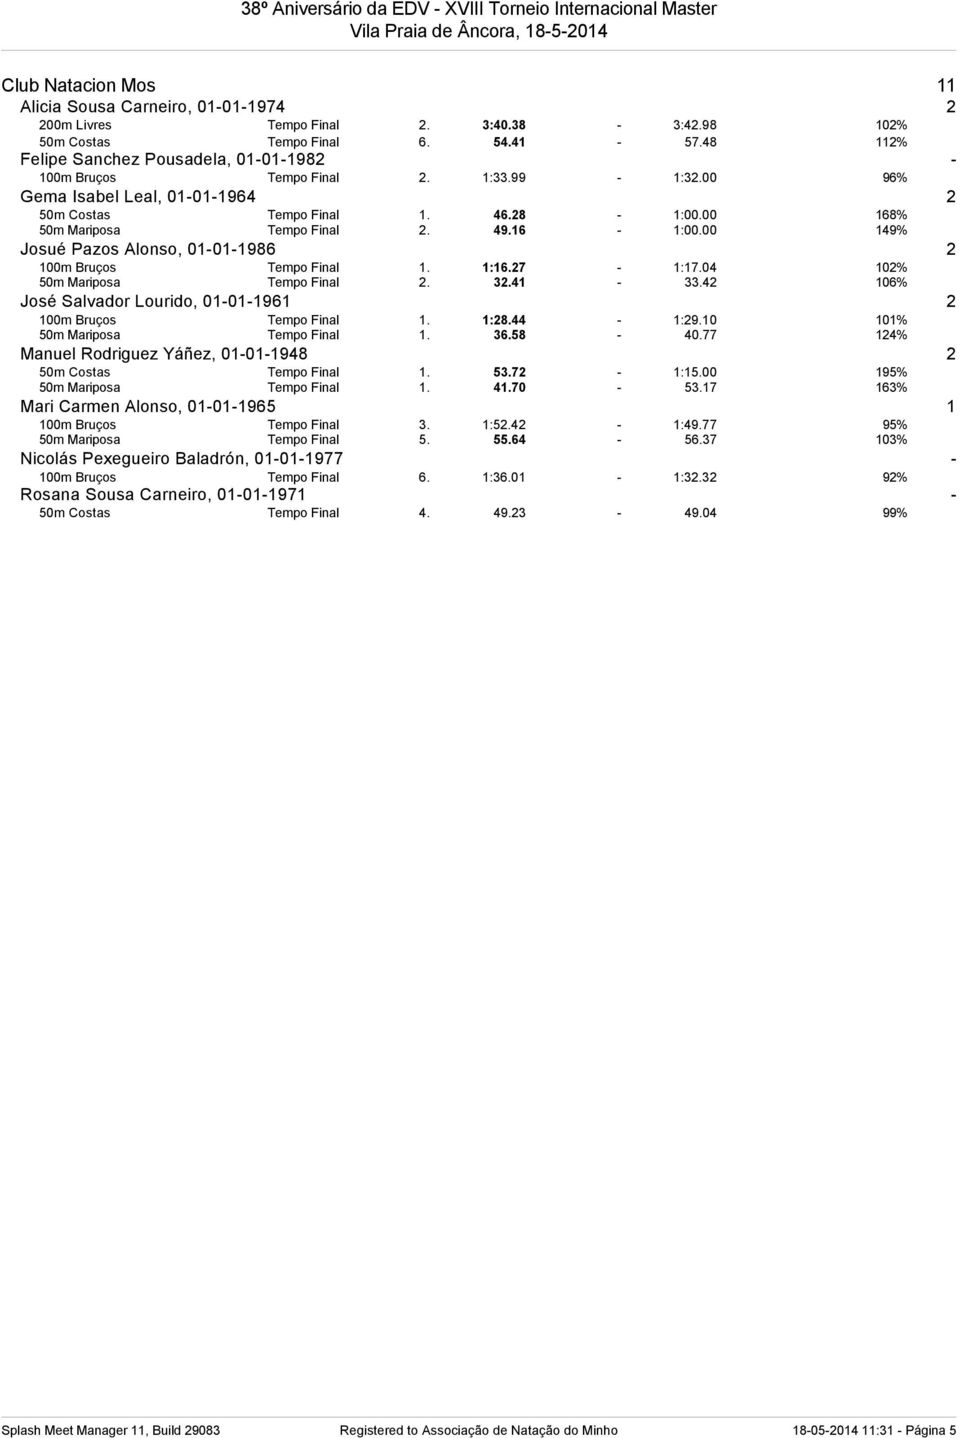 16-1:00.00 149% Josué Pazos Alonso, 01-01-1986 2 100m Bruços Tempo Final 1. 1:16.27-1:17.04 102% 50m Mariposa Tempo Final 2. 32.41-33.